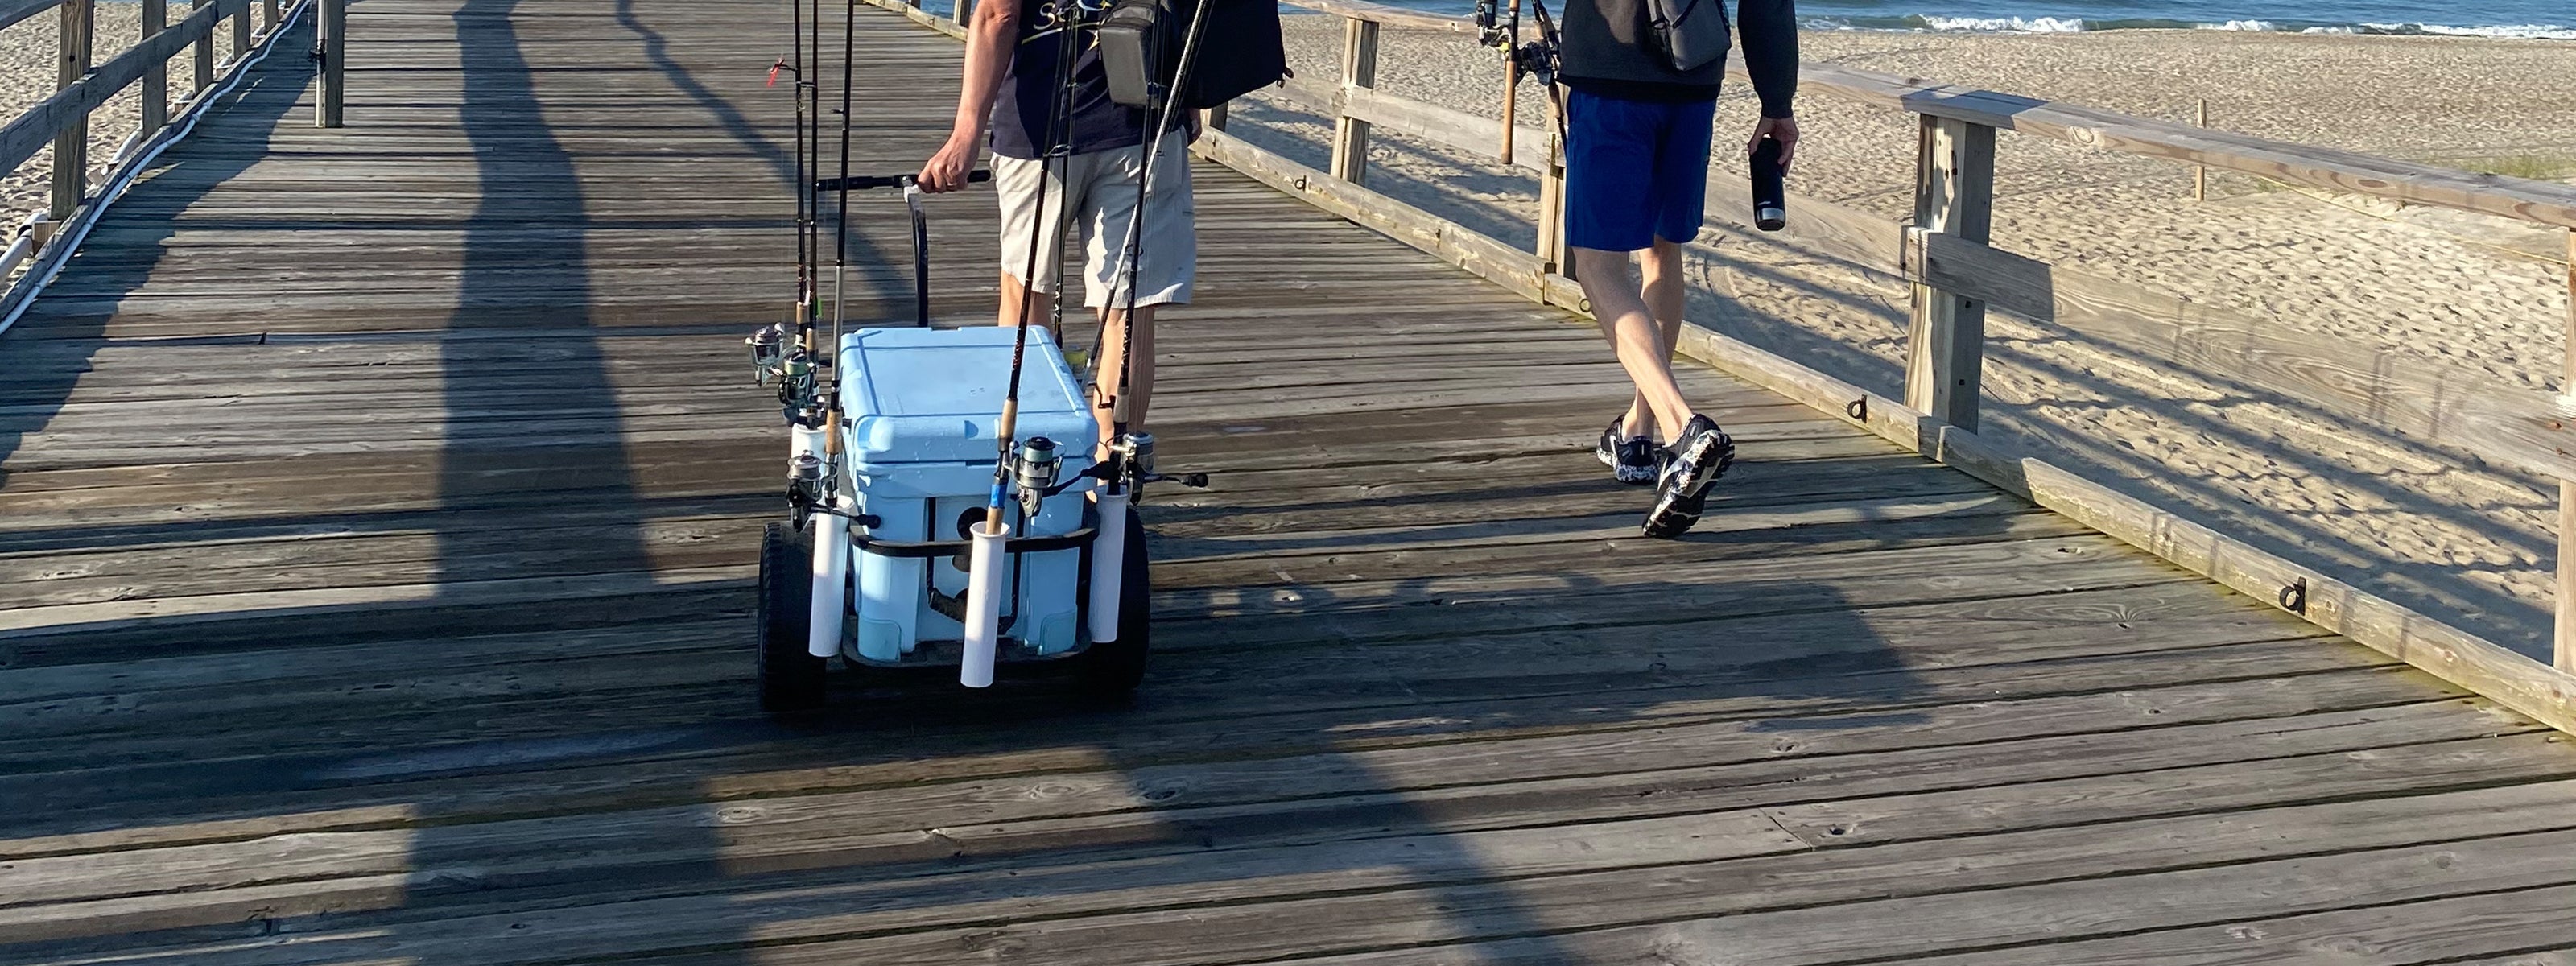 Sea Striker pier and surf cart